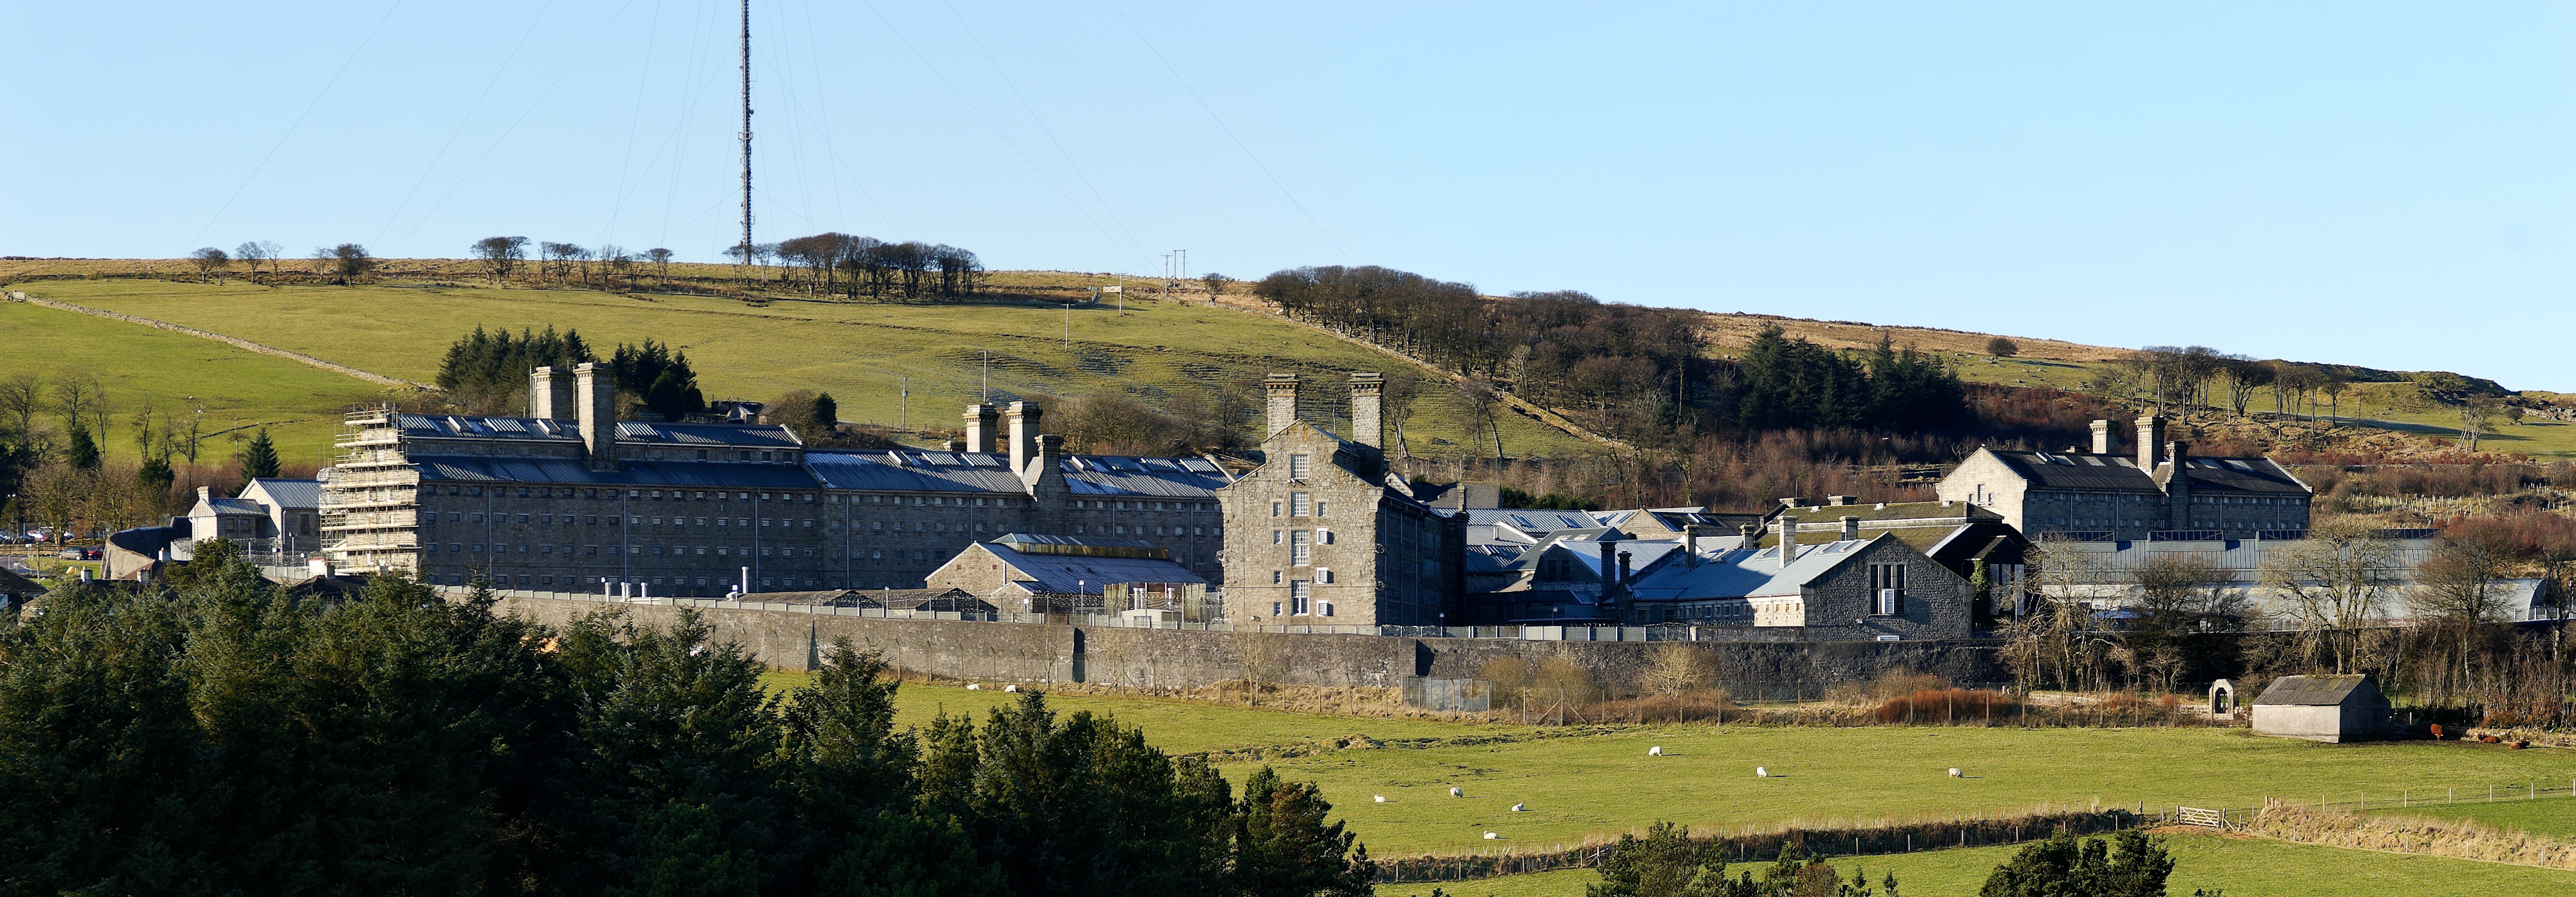 Dartmoor Prison pan